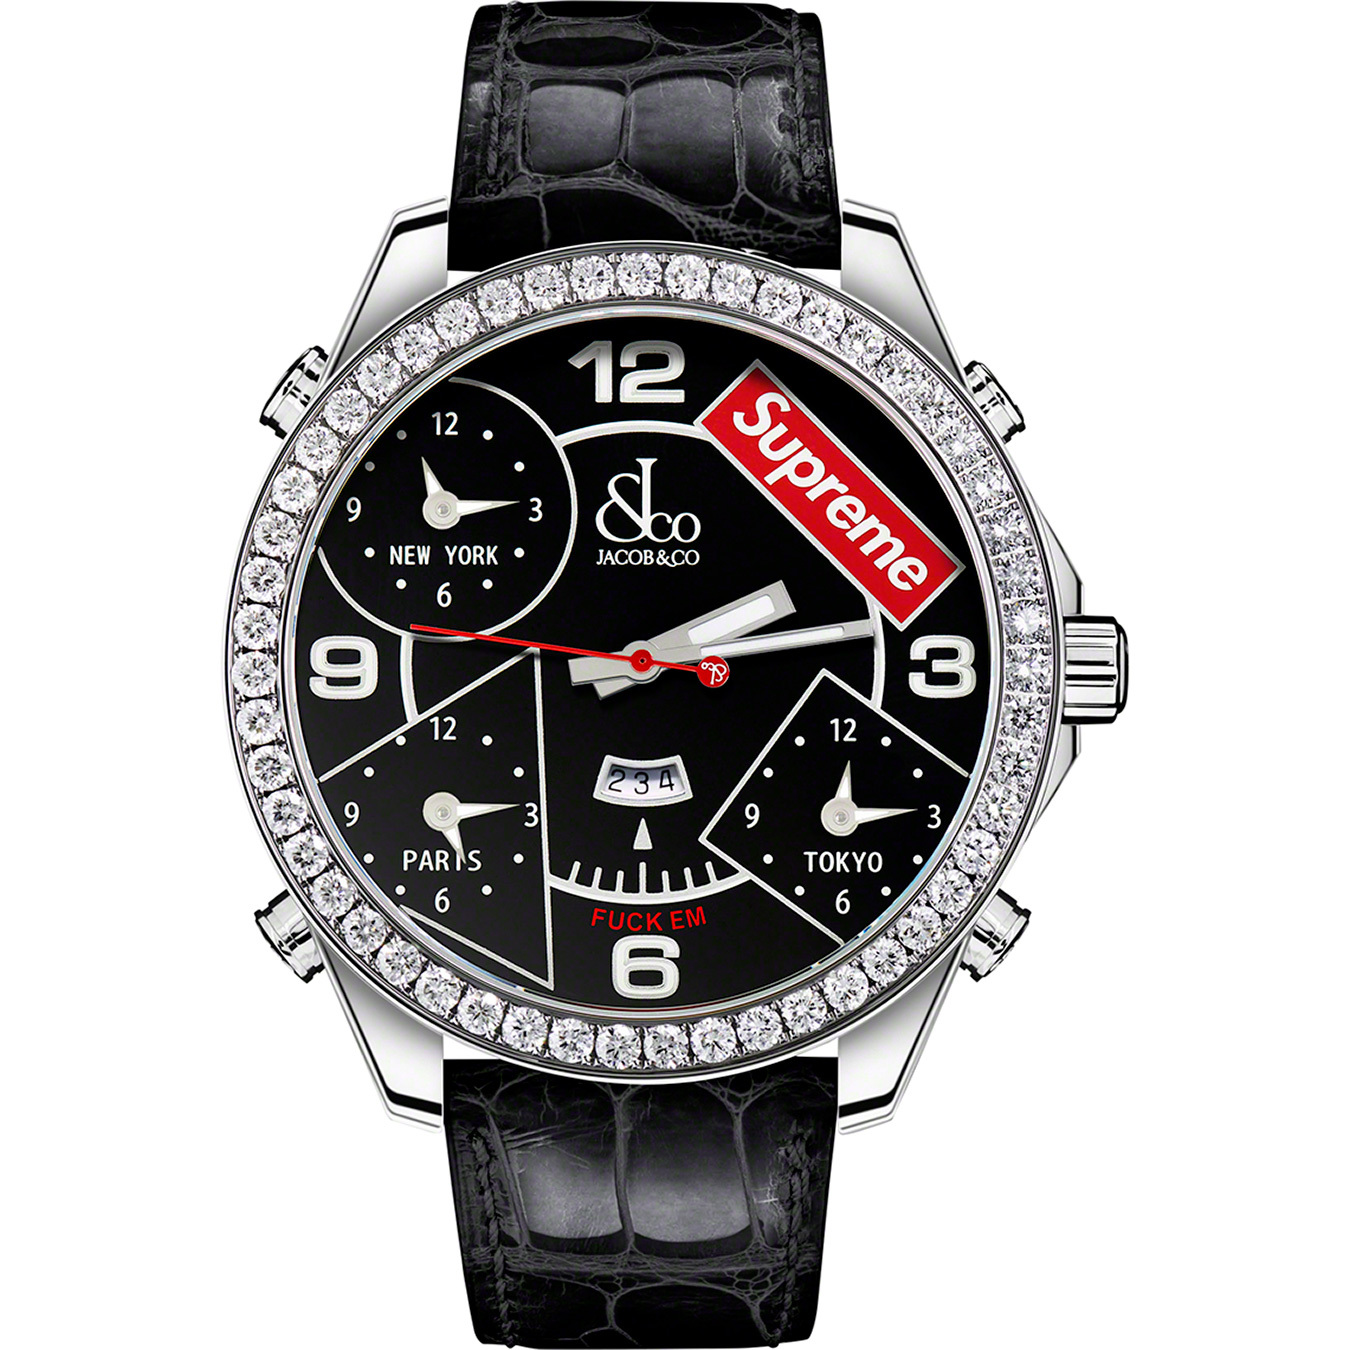 Supreme®/Jacob & Co Time Zone 47mm Watch